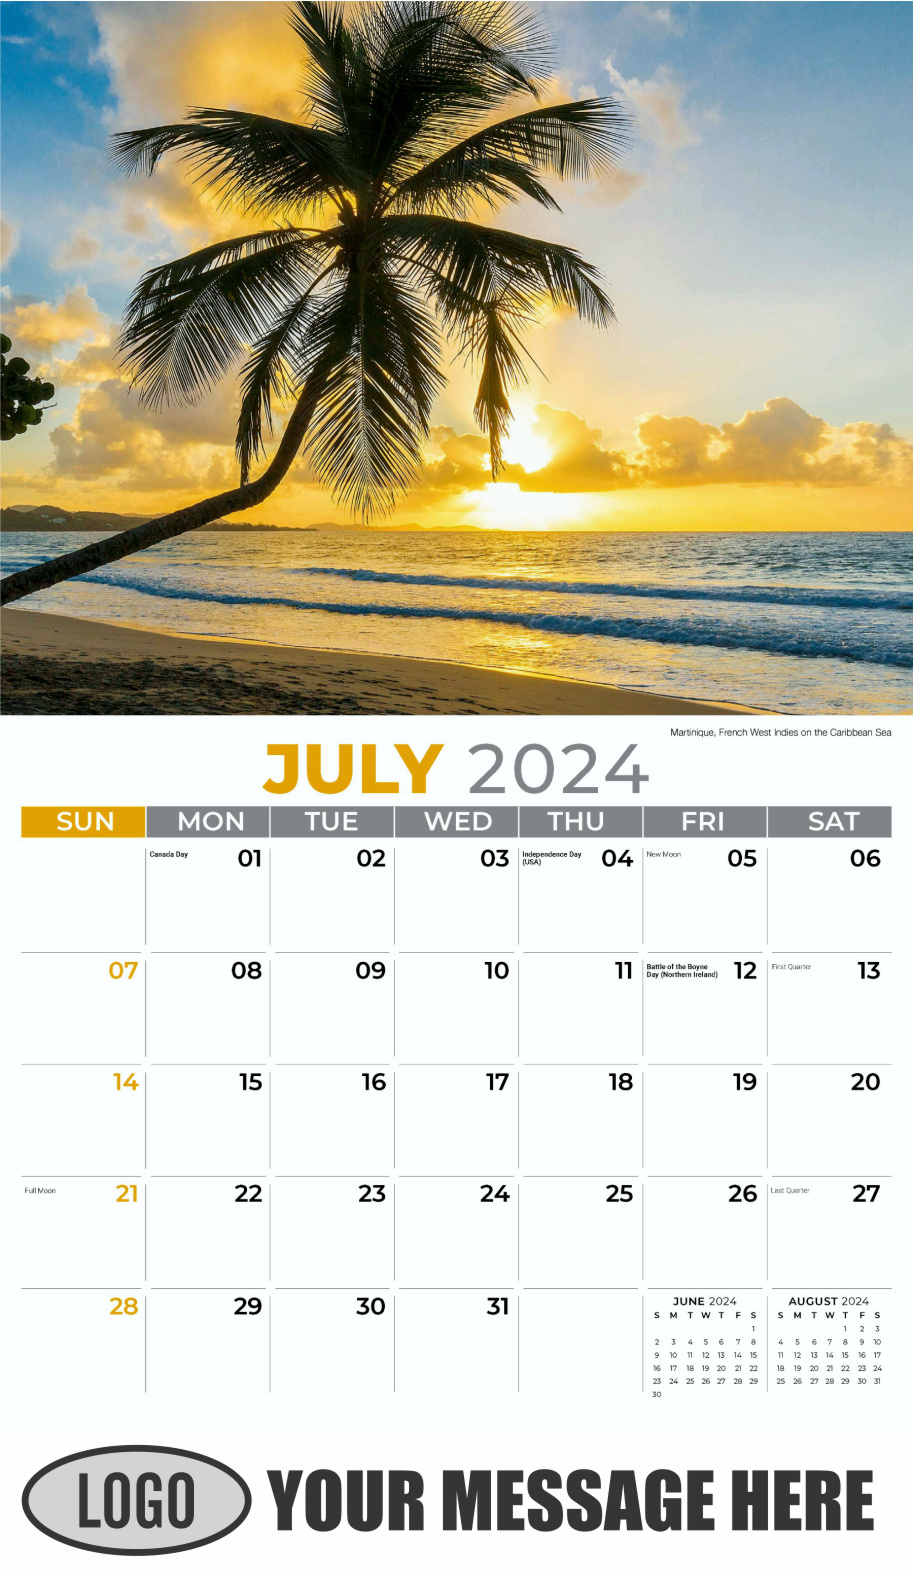 Sun, Sand and Surf 2024 Business Advertsing Wall Calendar - July